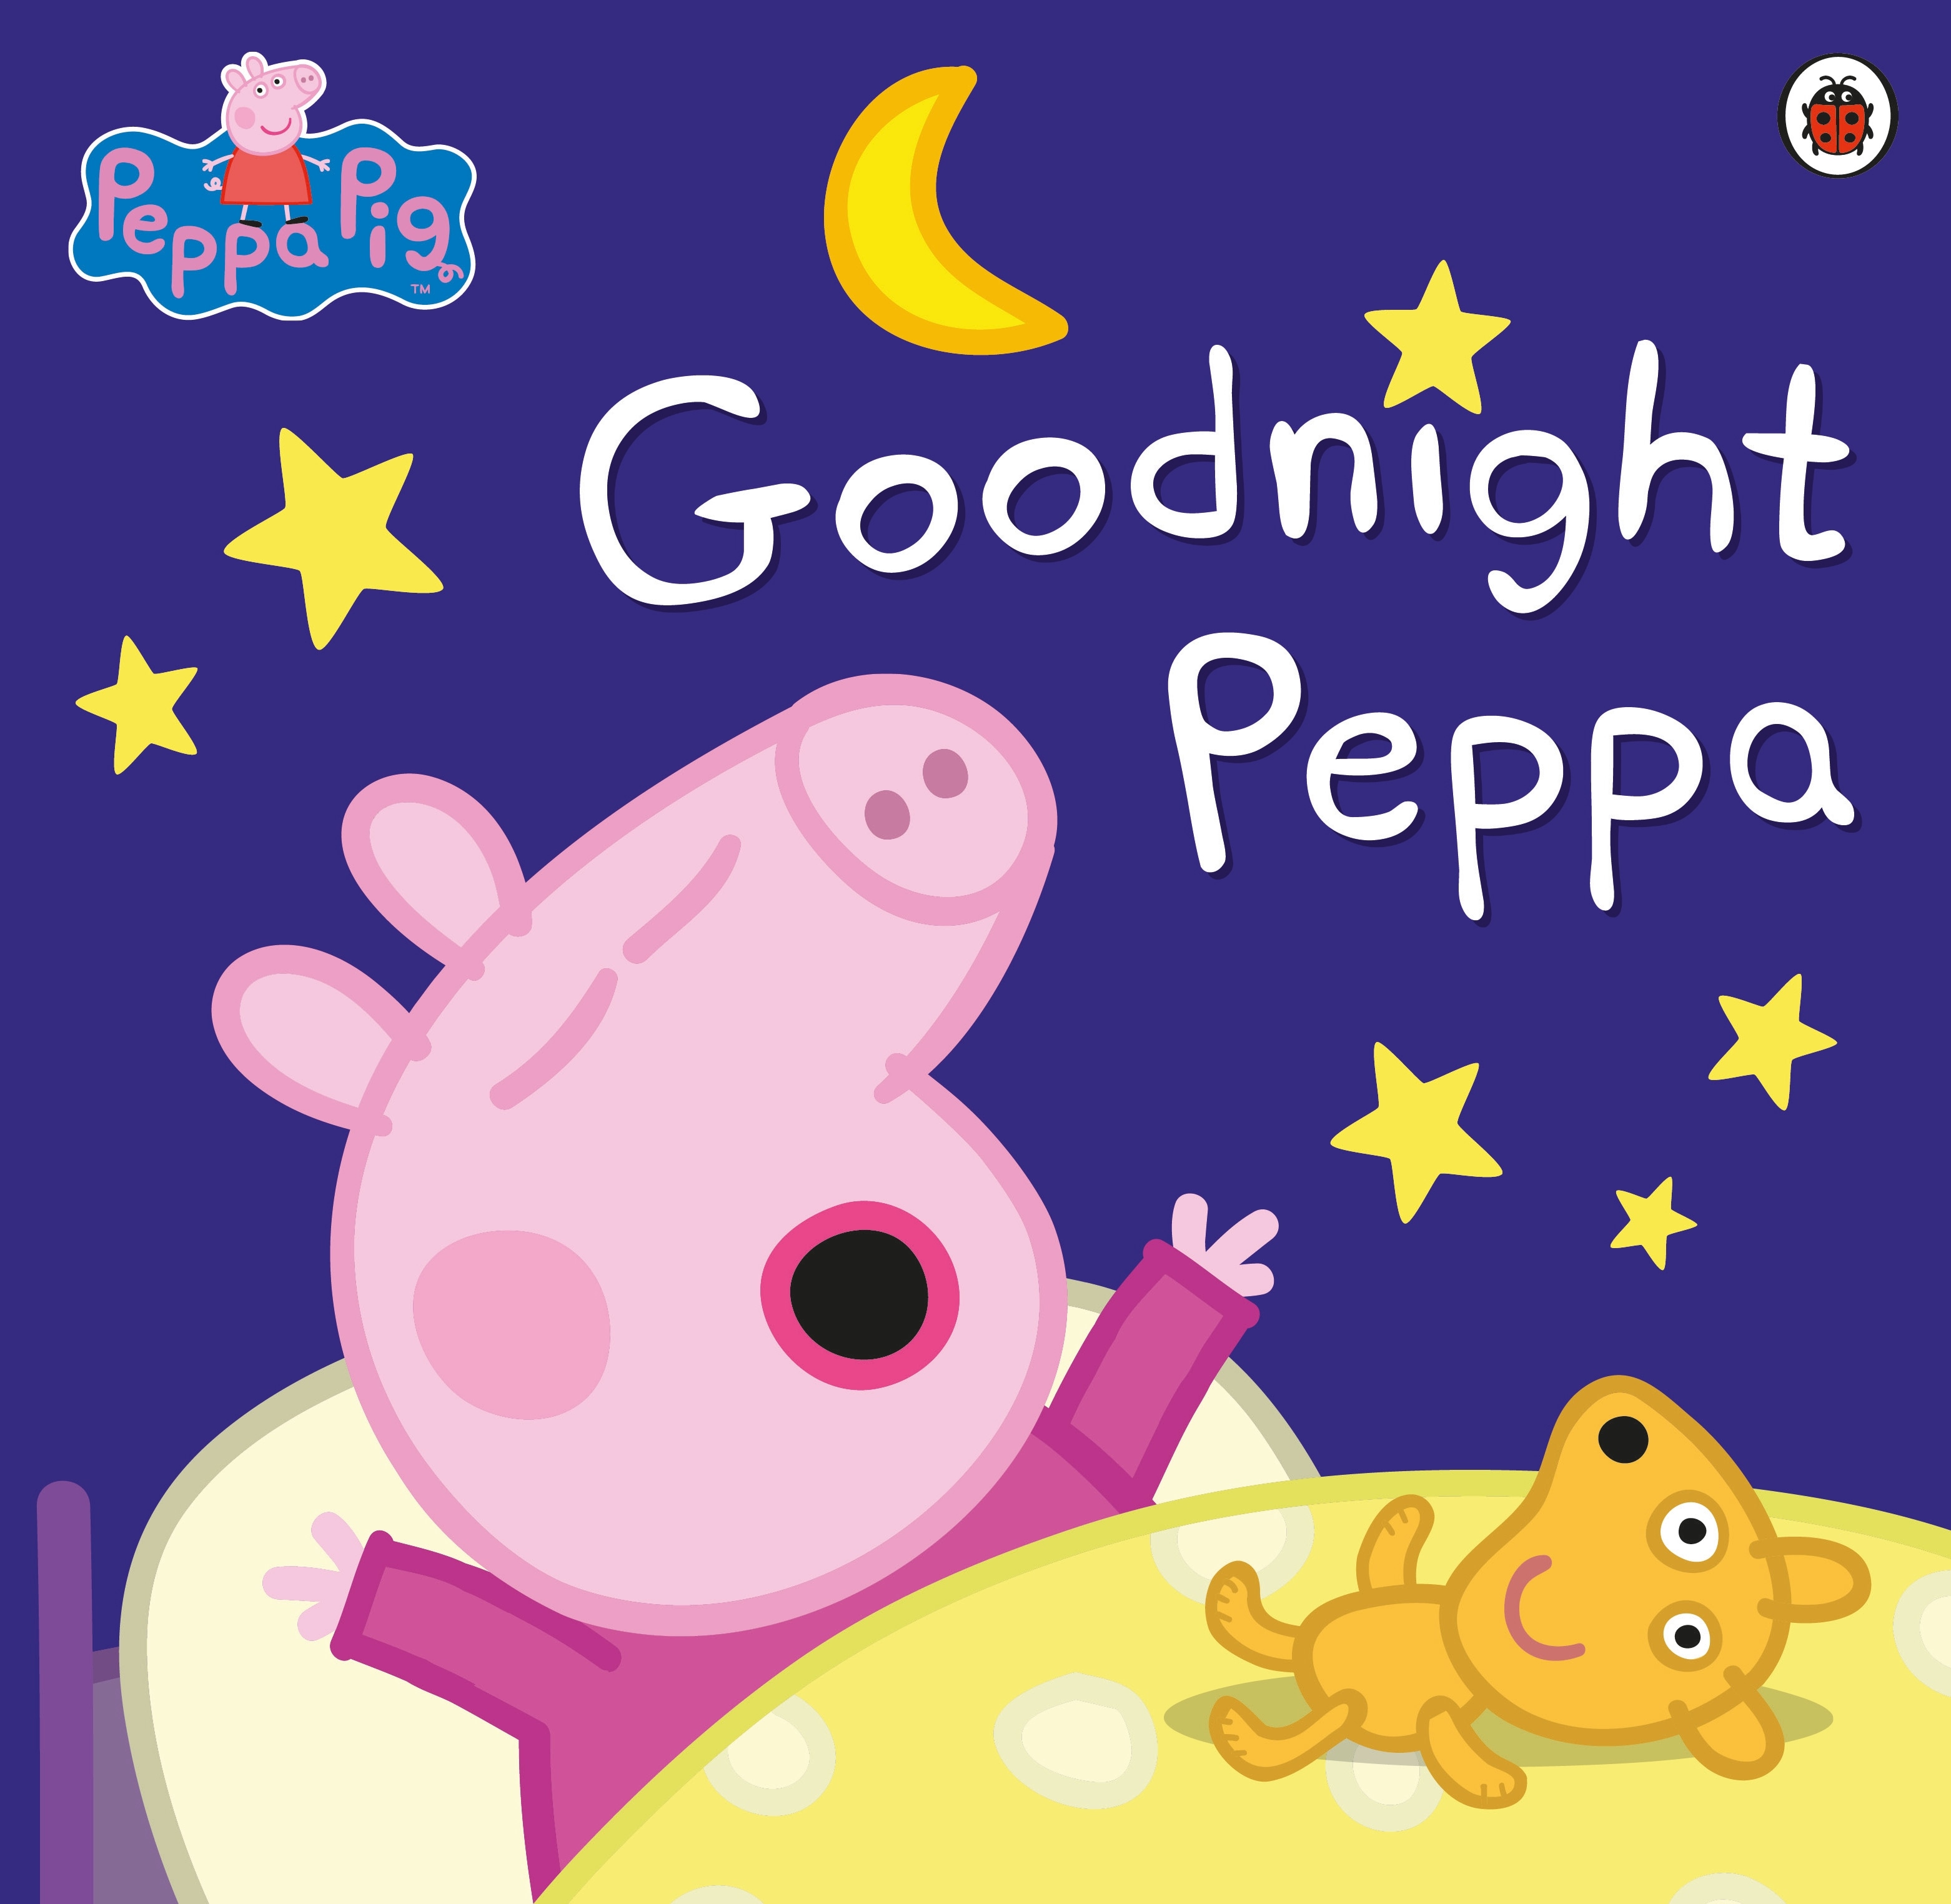 Book “Peppa Pig: Goodnight Peppa” by Peppa Pig — August 27, 2015